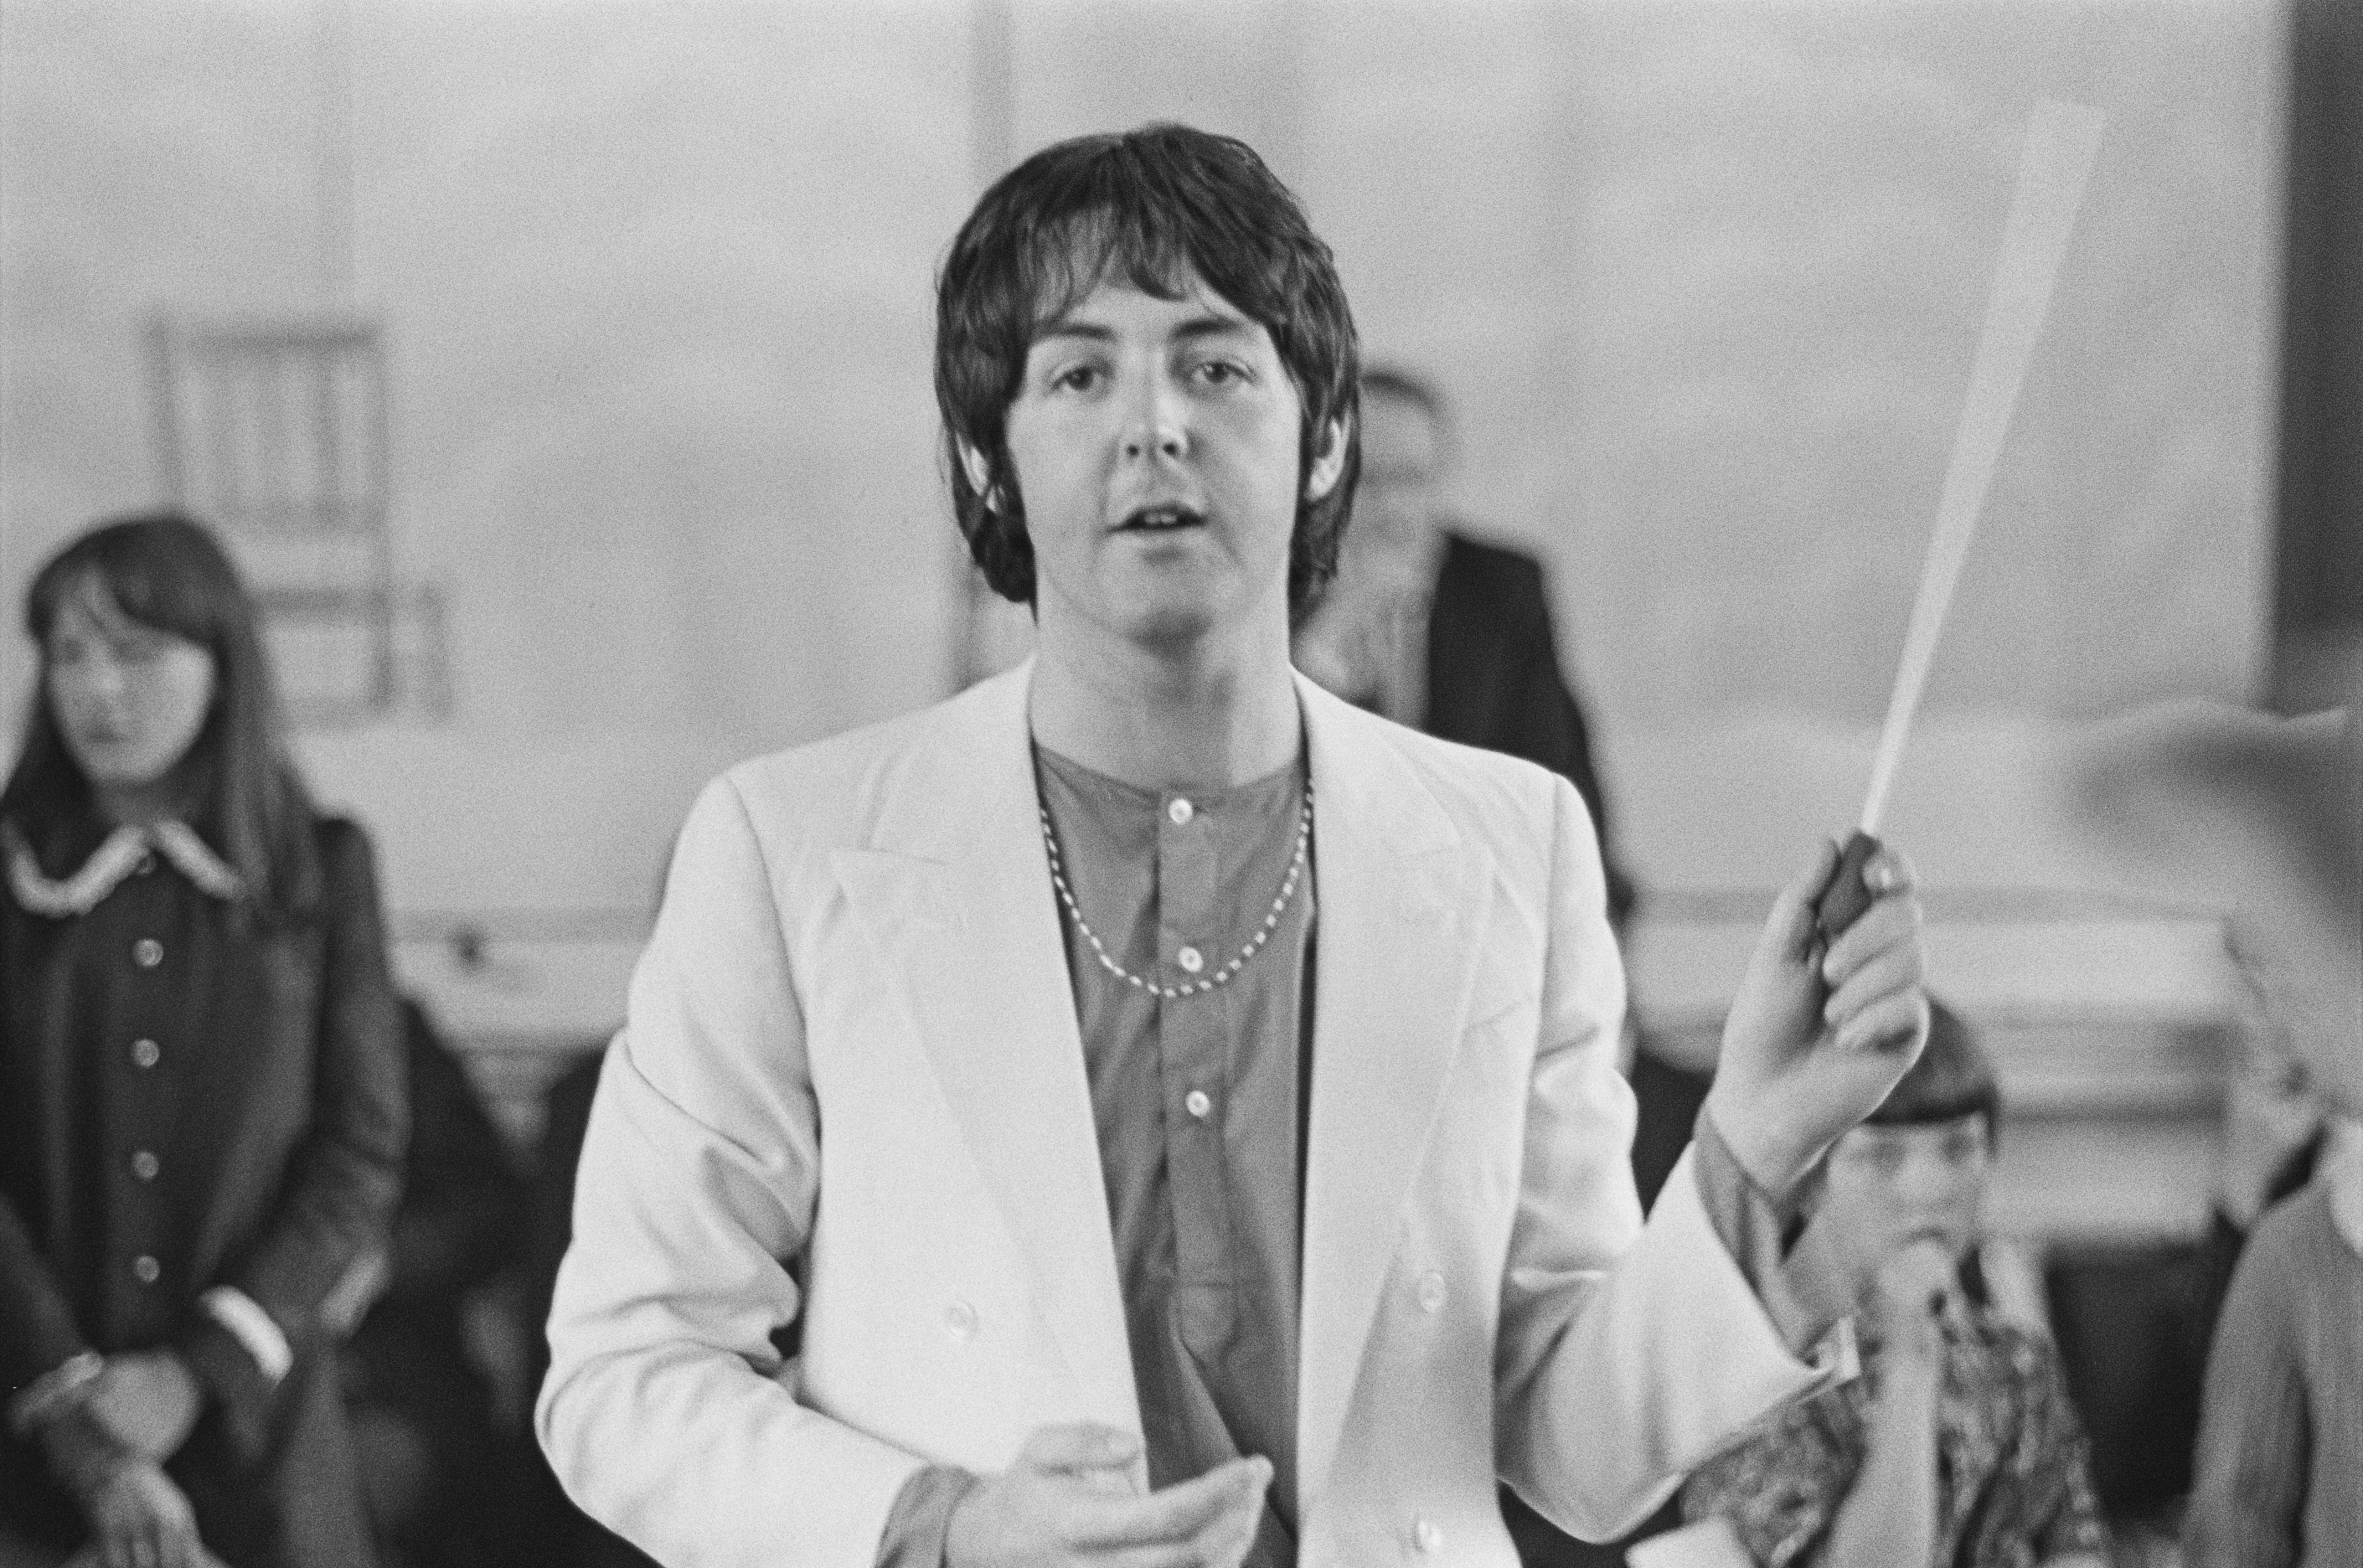 Paul beatles. Paul MCCARTNEY 1968. Битлз Маккартни. The Beatles пол Маккартни. Пол Маккартни 1963.